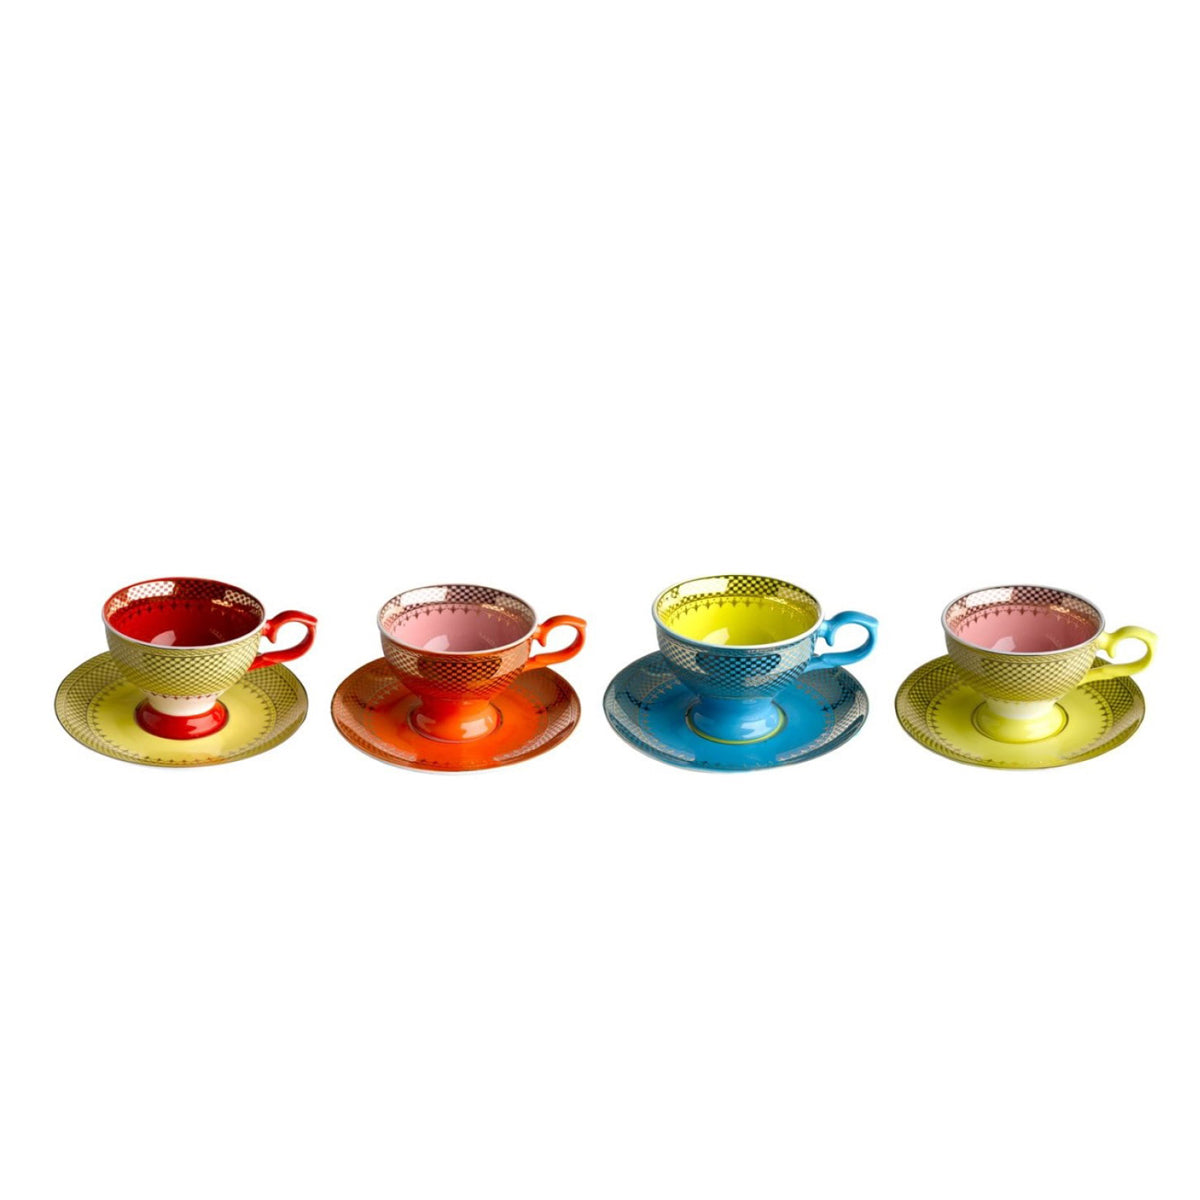 Grandma set of 4 espresso cups and saucers in multicoloured - Polspotten